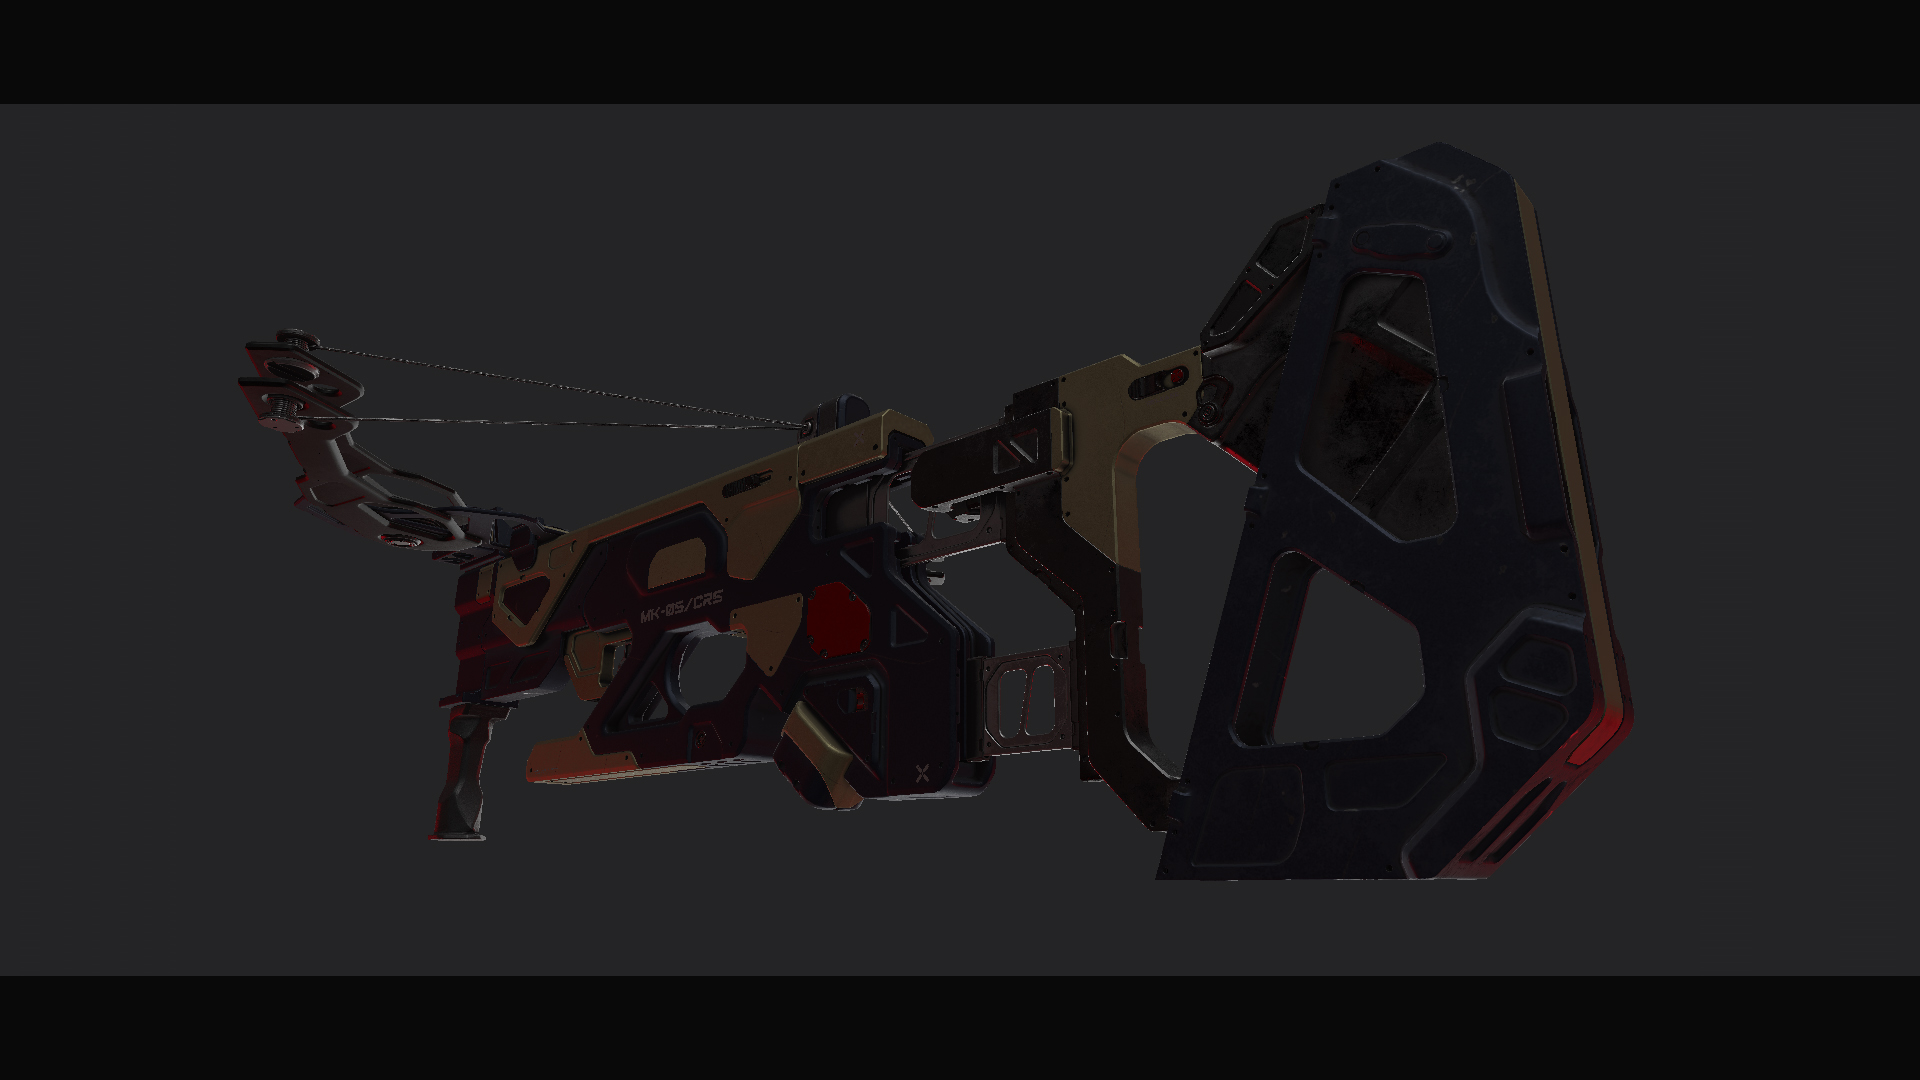 Three D Guns 2 / MK_05/CRS - Futuristic Crossbow